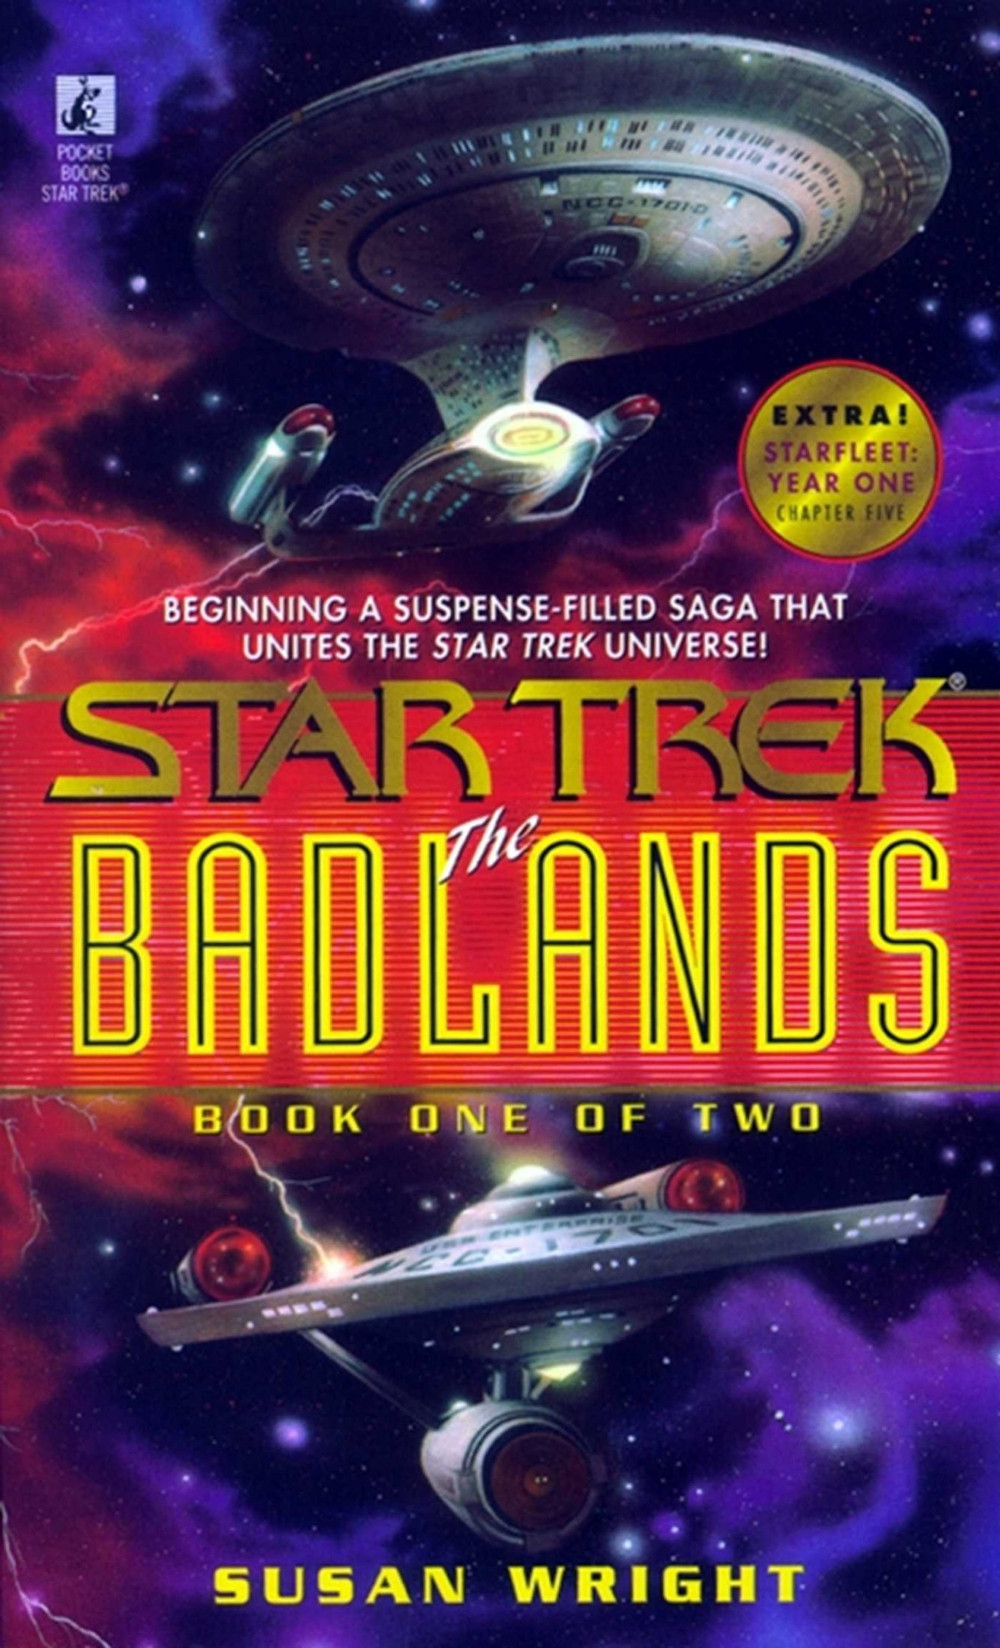 The Badlands, Book One (Dec 1999)